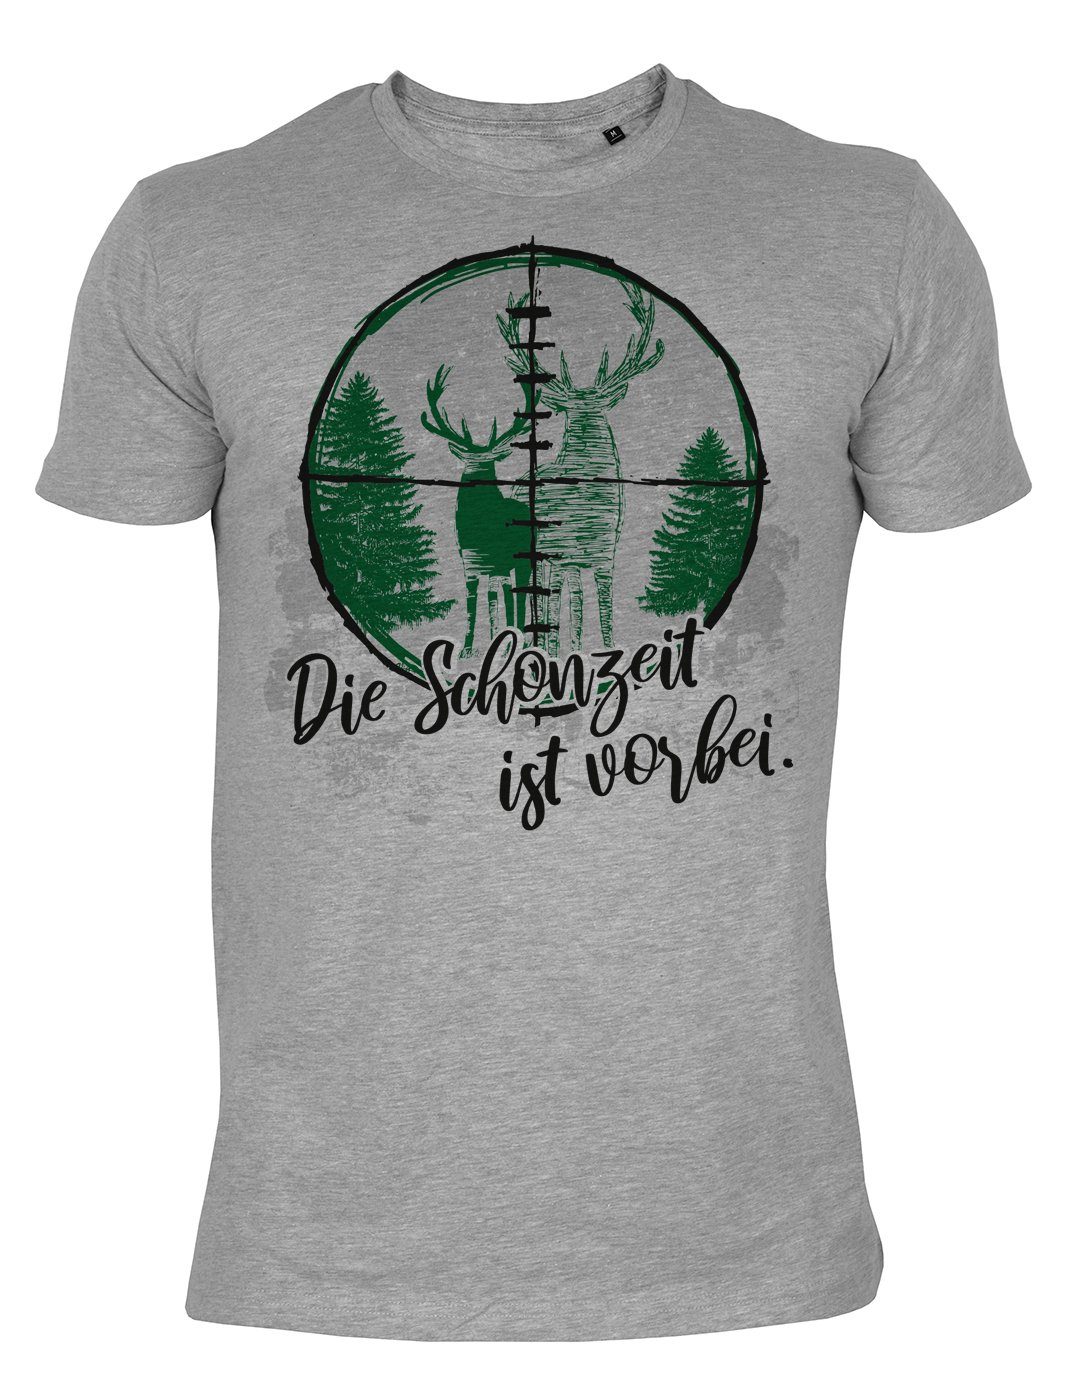 Tini Schonzeit Hirsch - Shirts Jagdsport T-Shirt Jagd Die ist vorbei Jagd Jäger Motiv Shirt :